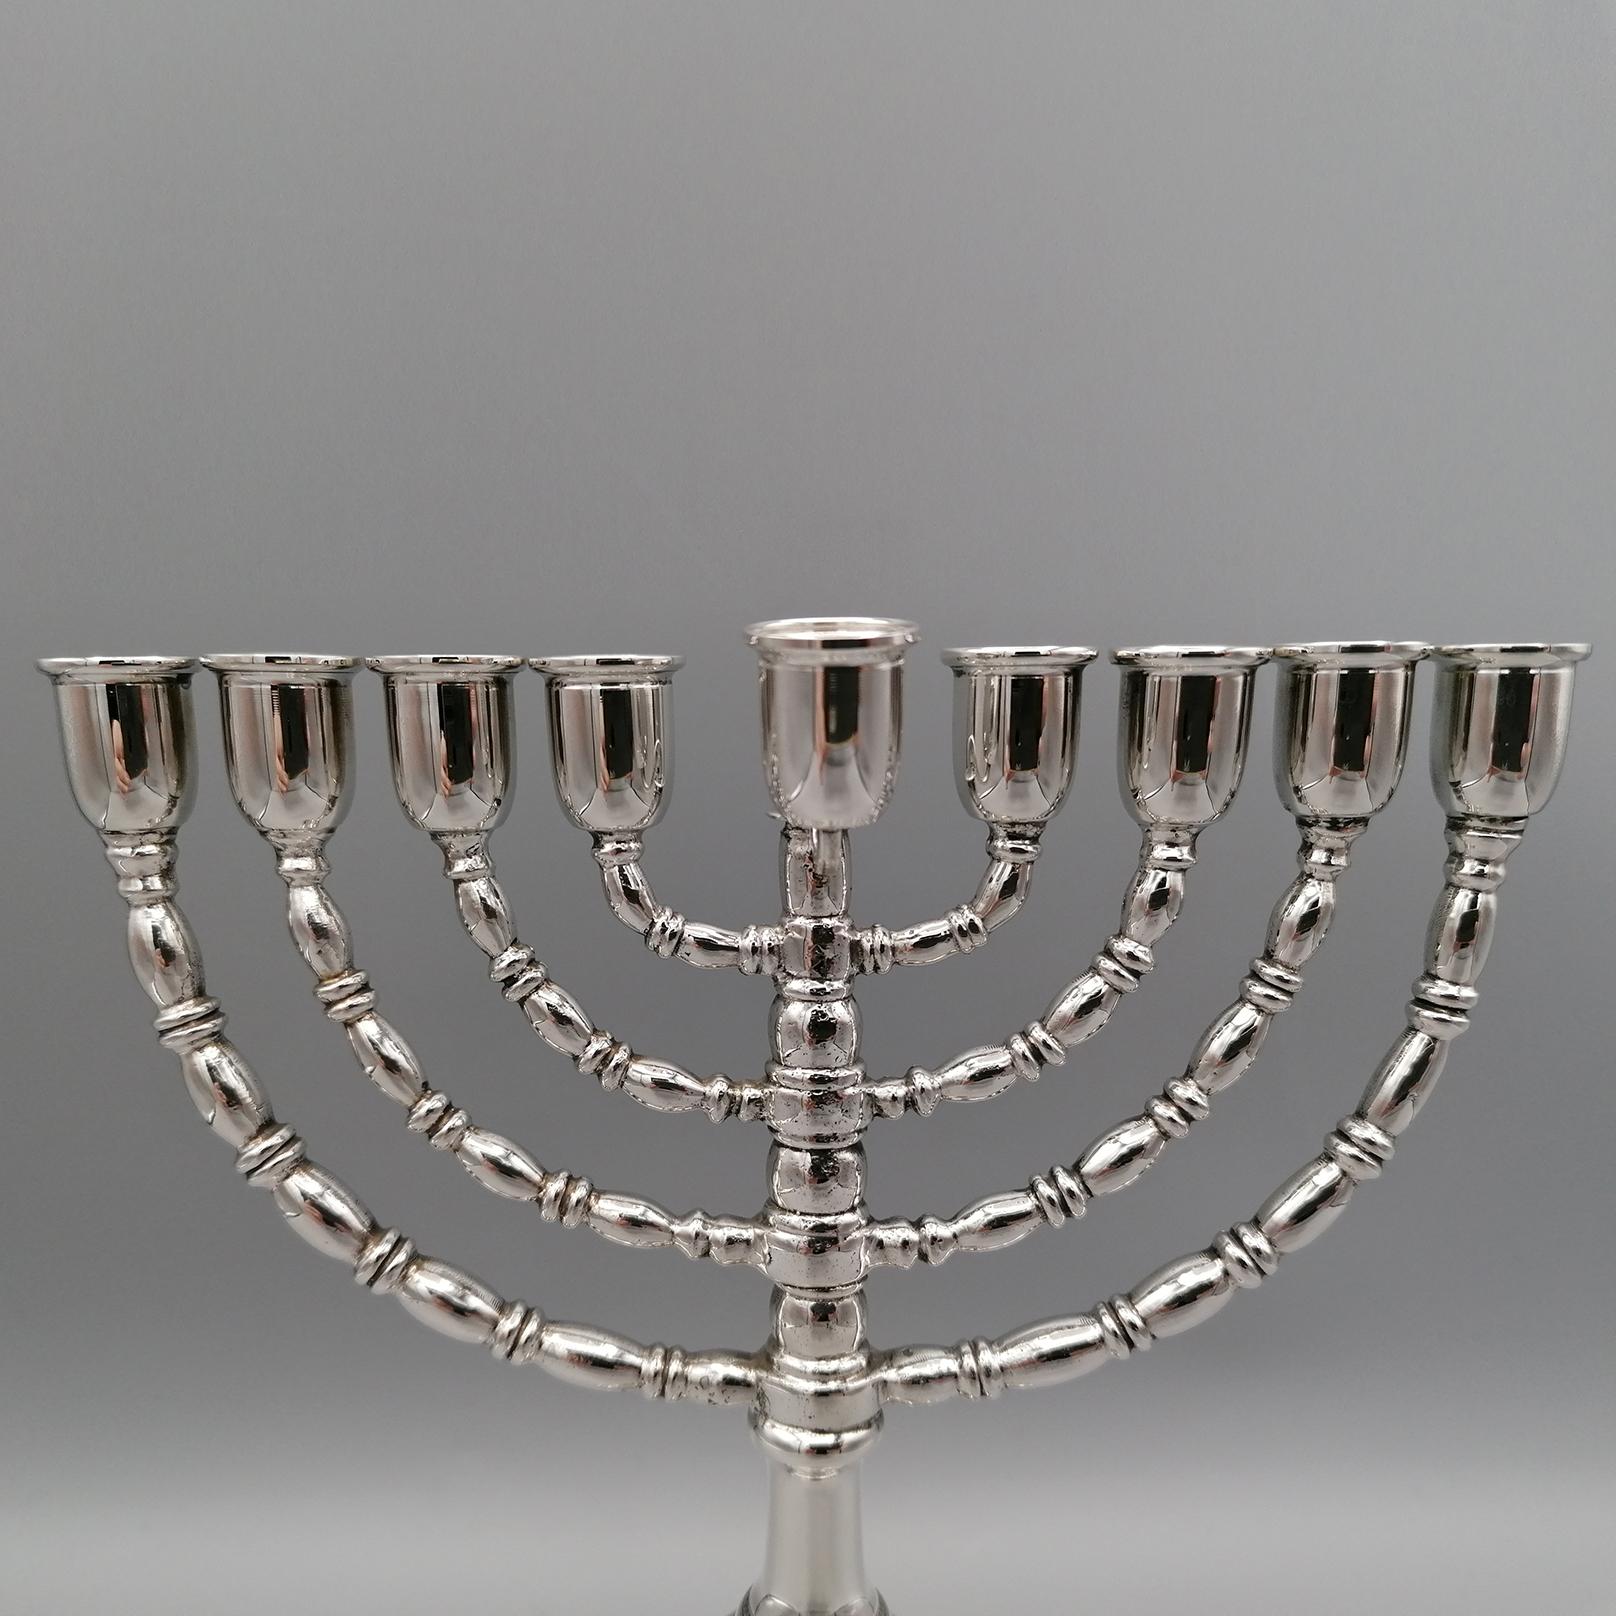 Contemporary 21st Century Italian Sterling Silver Jewish Candelabra Hanukkah